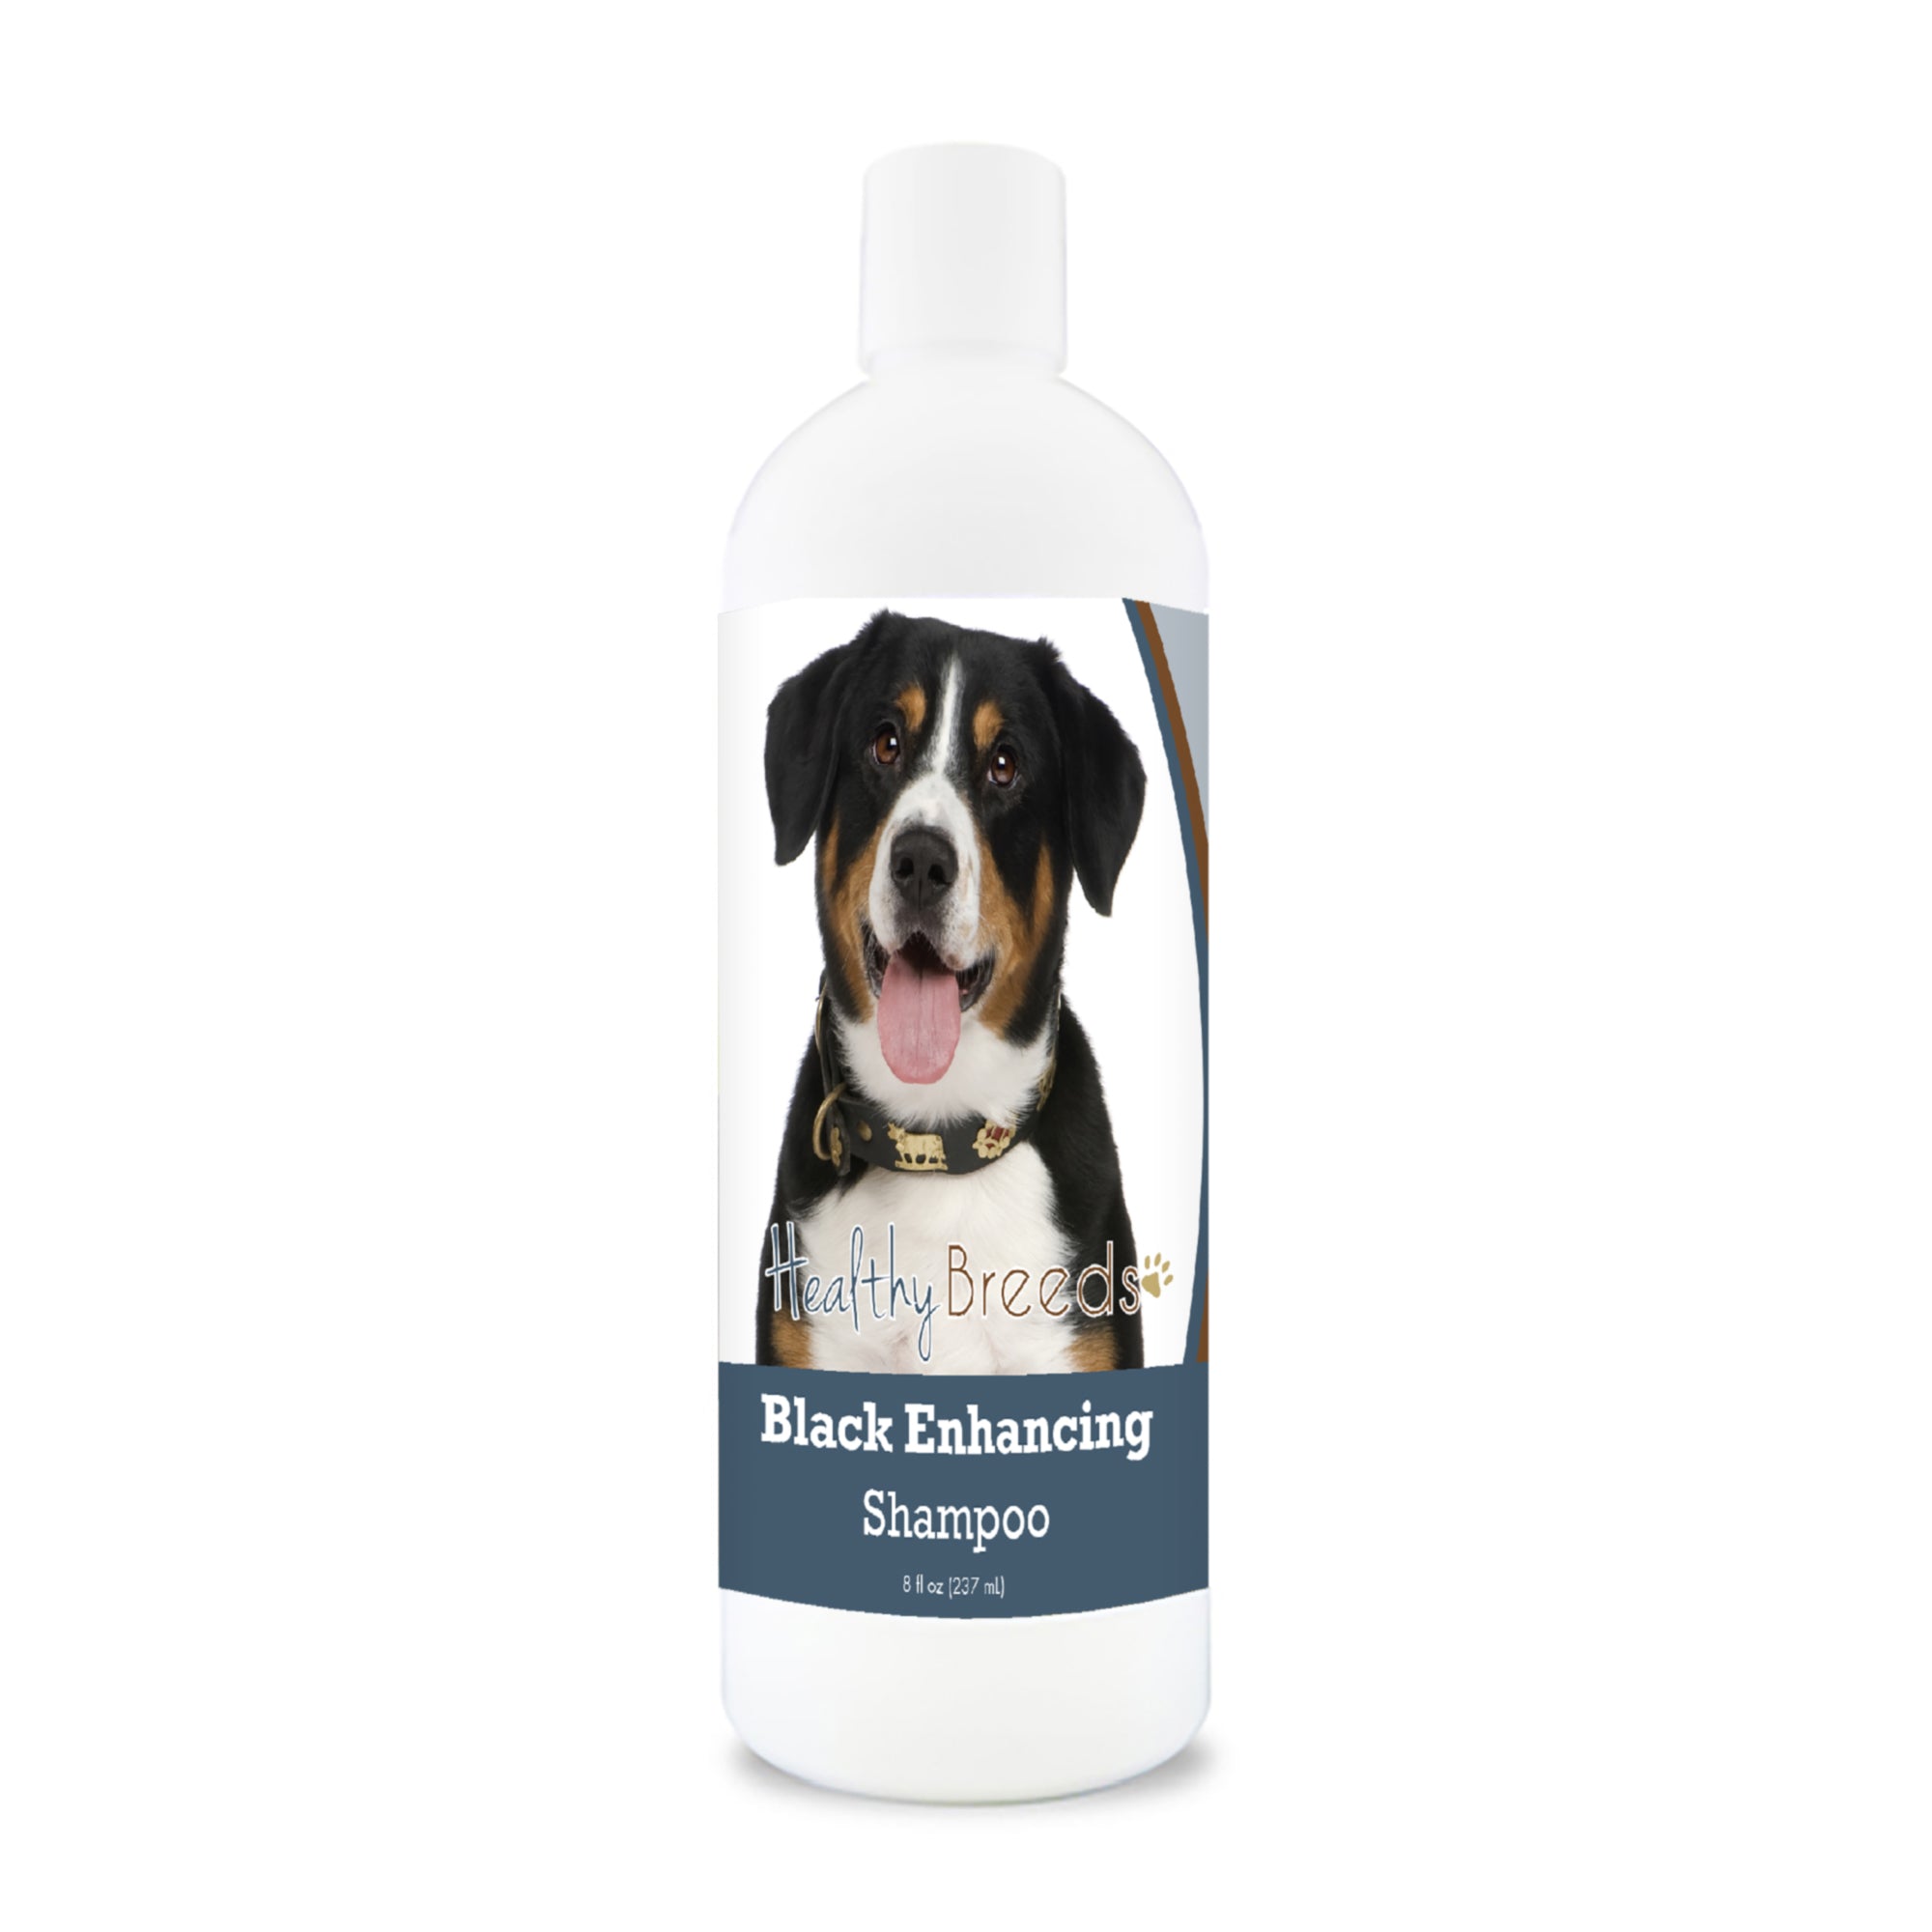 Entlebucher Mountain Dog Black Enhancing Shampoo 8 oz